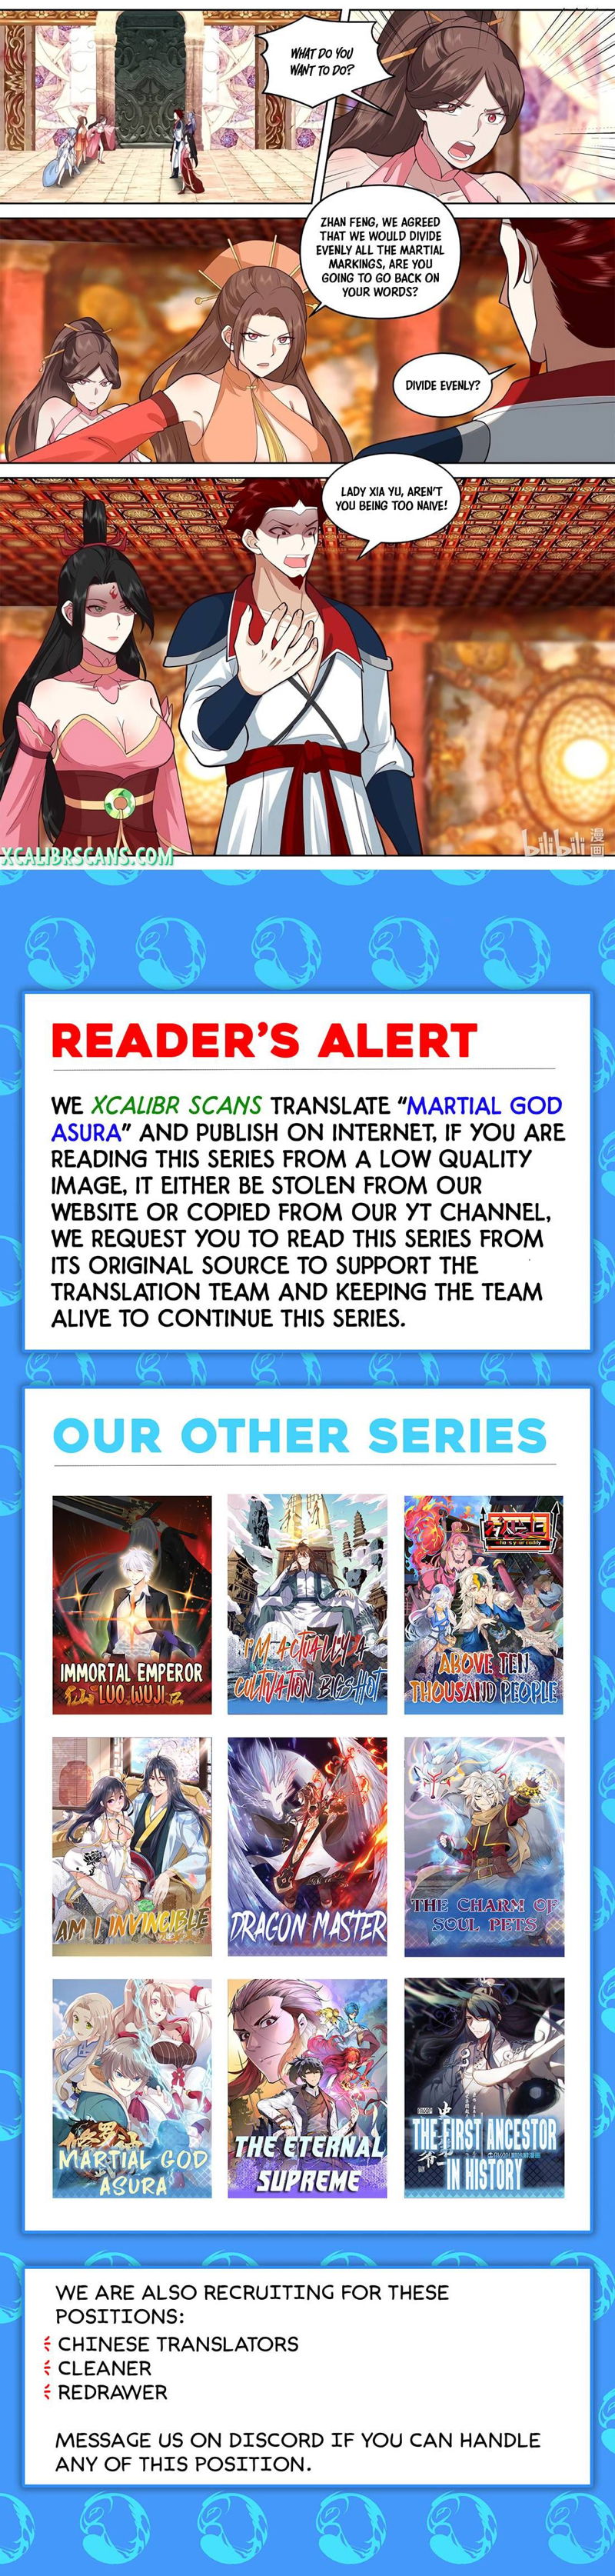 Martial God Asura Chapter 477 page 10